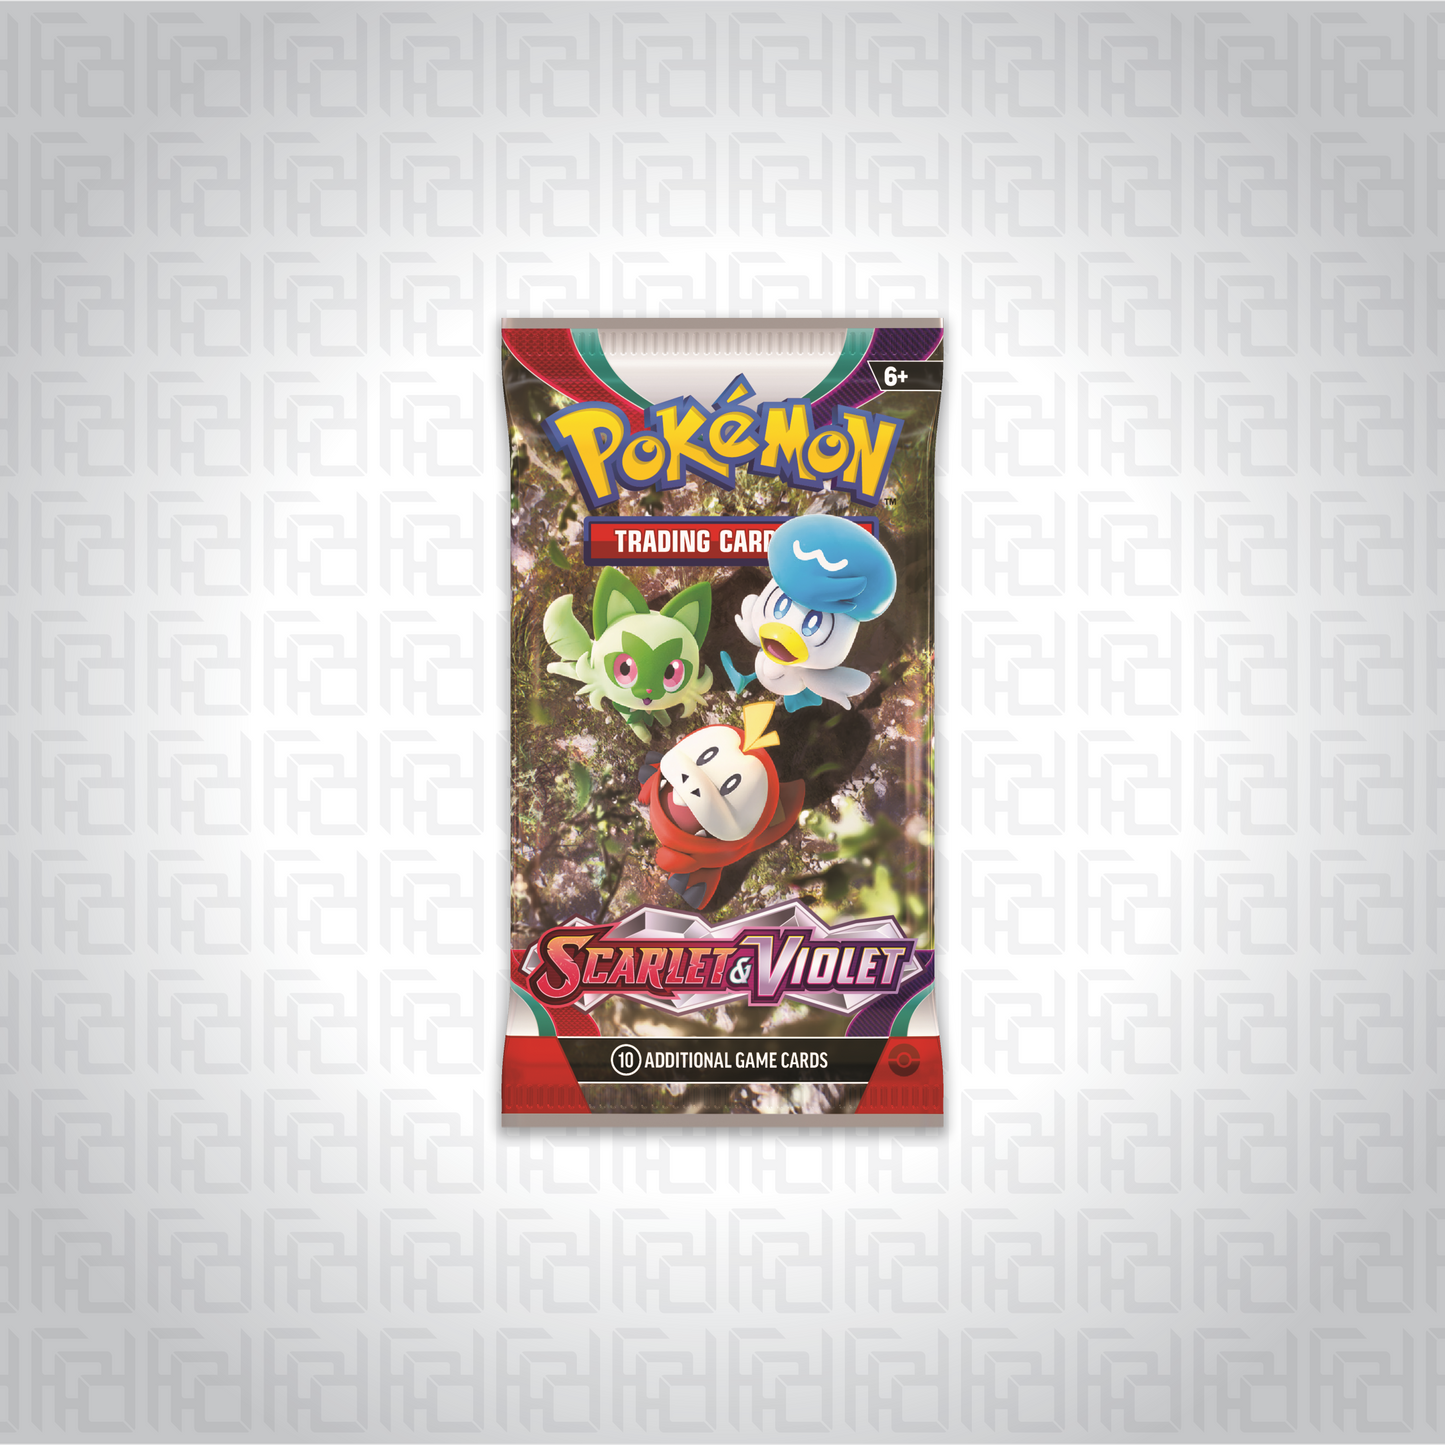 Pokemon Trading Card Game booster pack of Scarlet & Violet expansion.